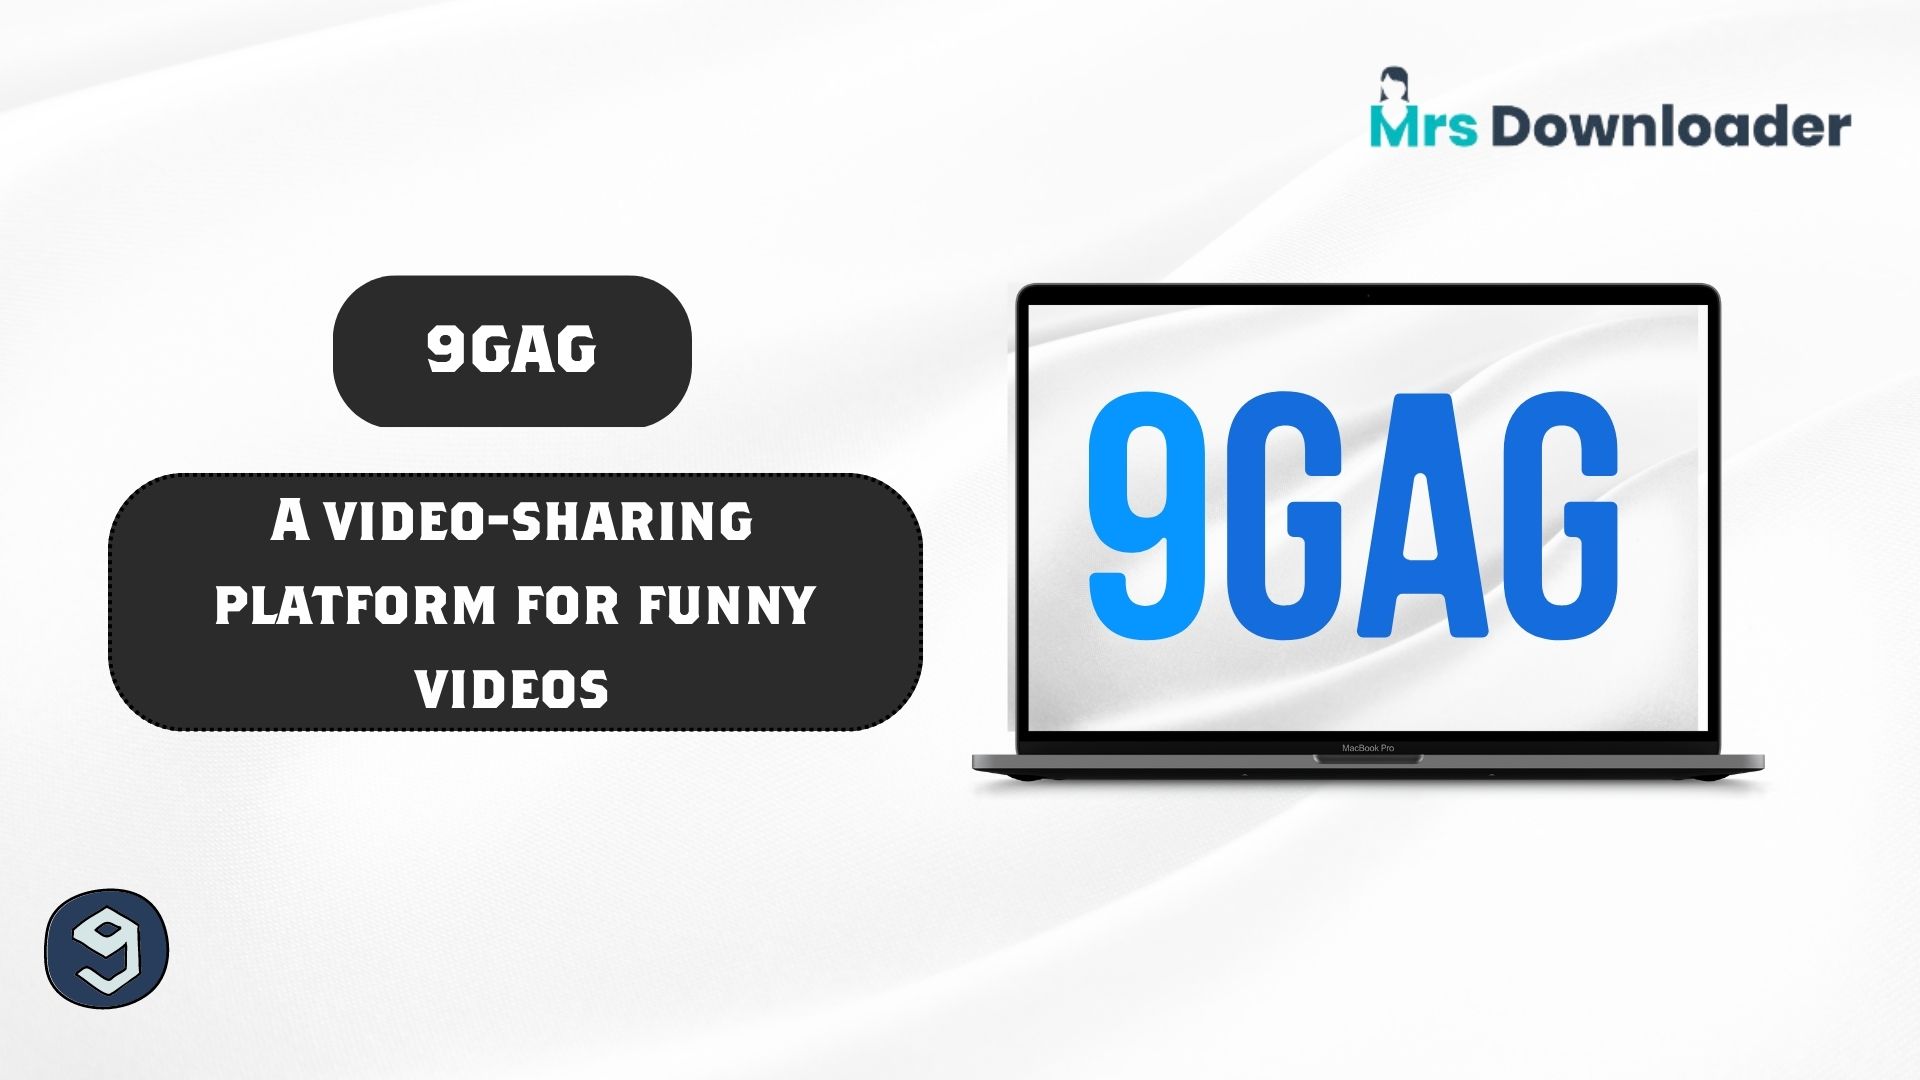 9GAG: A video-sharing platform for funny videos